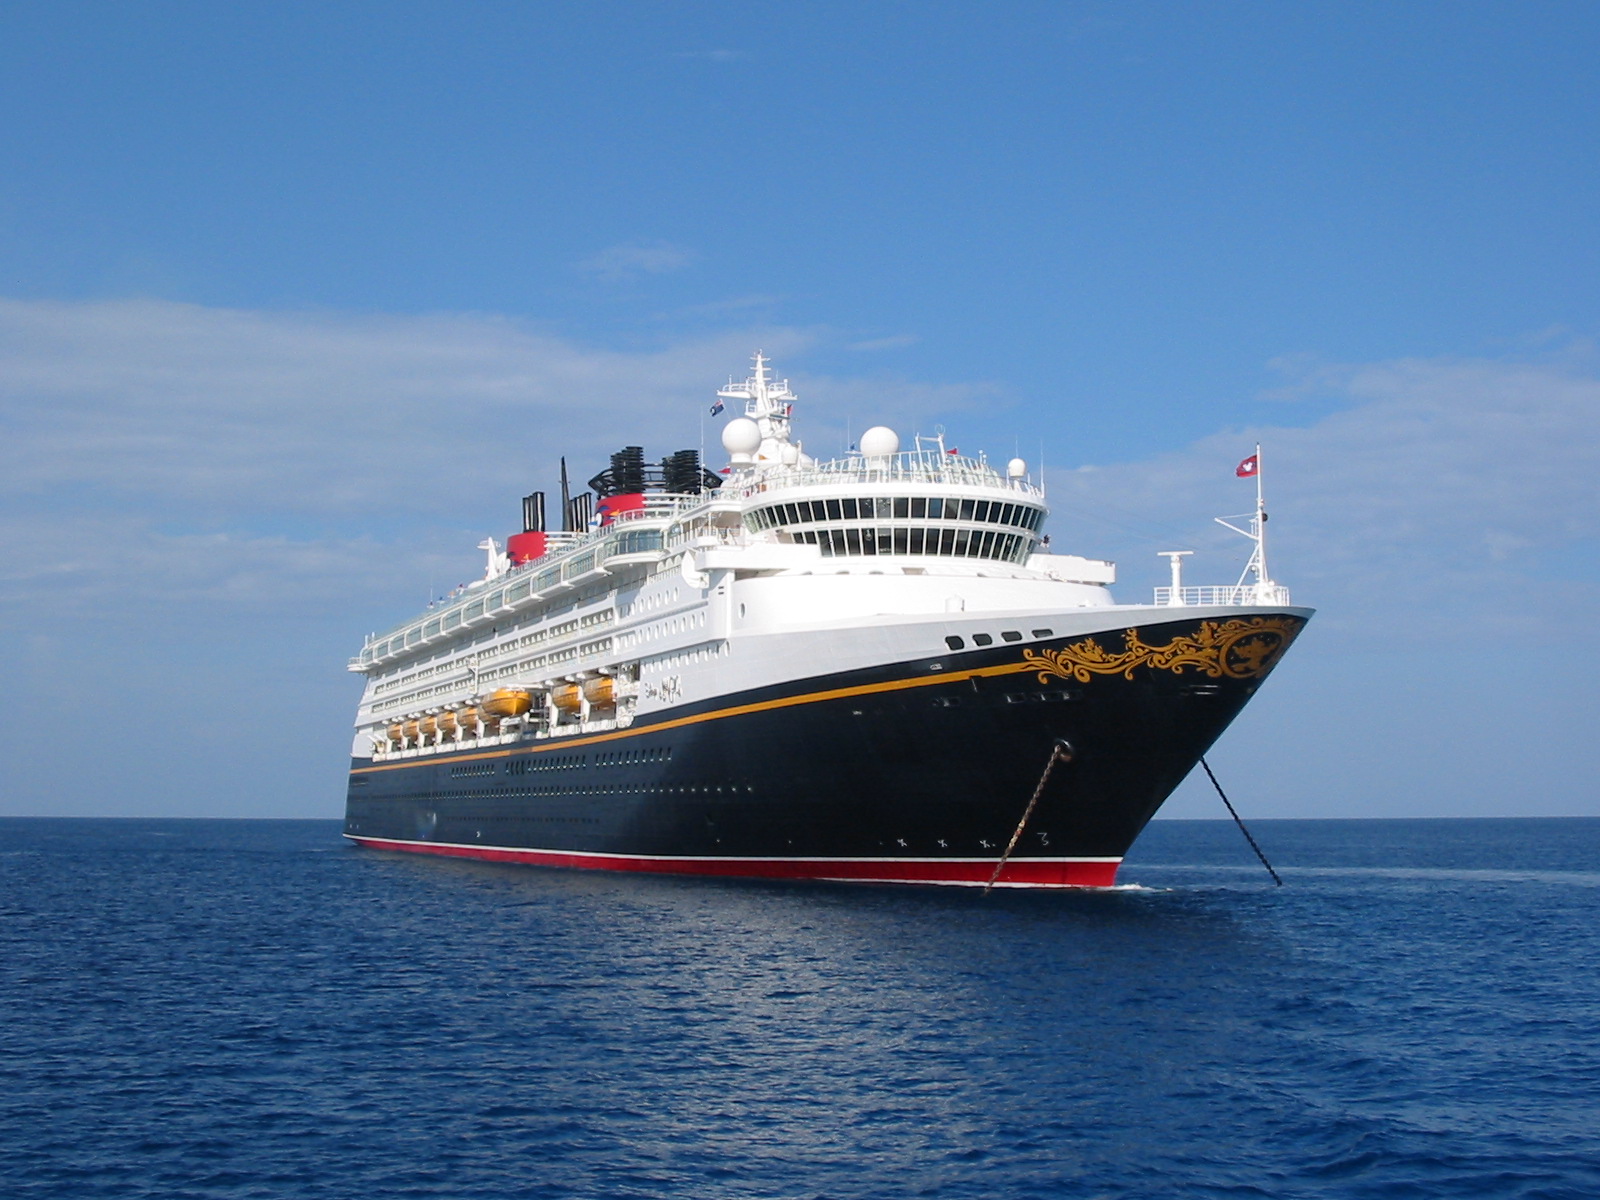 http://3.bp.blogspot.com/-kYxZB_hTR2s/T4rulliOmBI/AAAAAAAAArs/0acKGD-_azg/s1600/cruise_ship_on_the_ocean.jpg